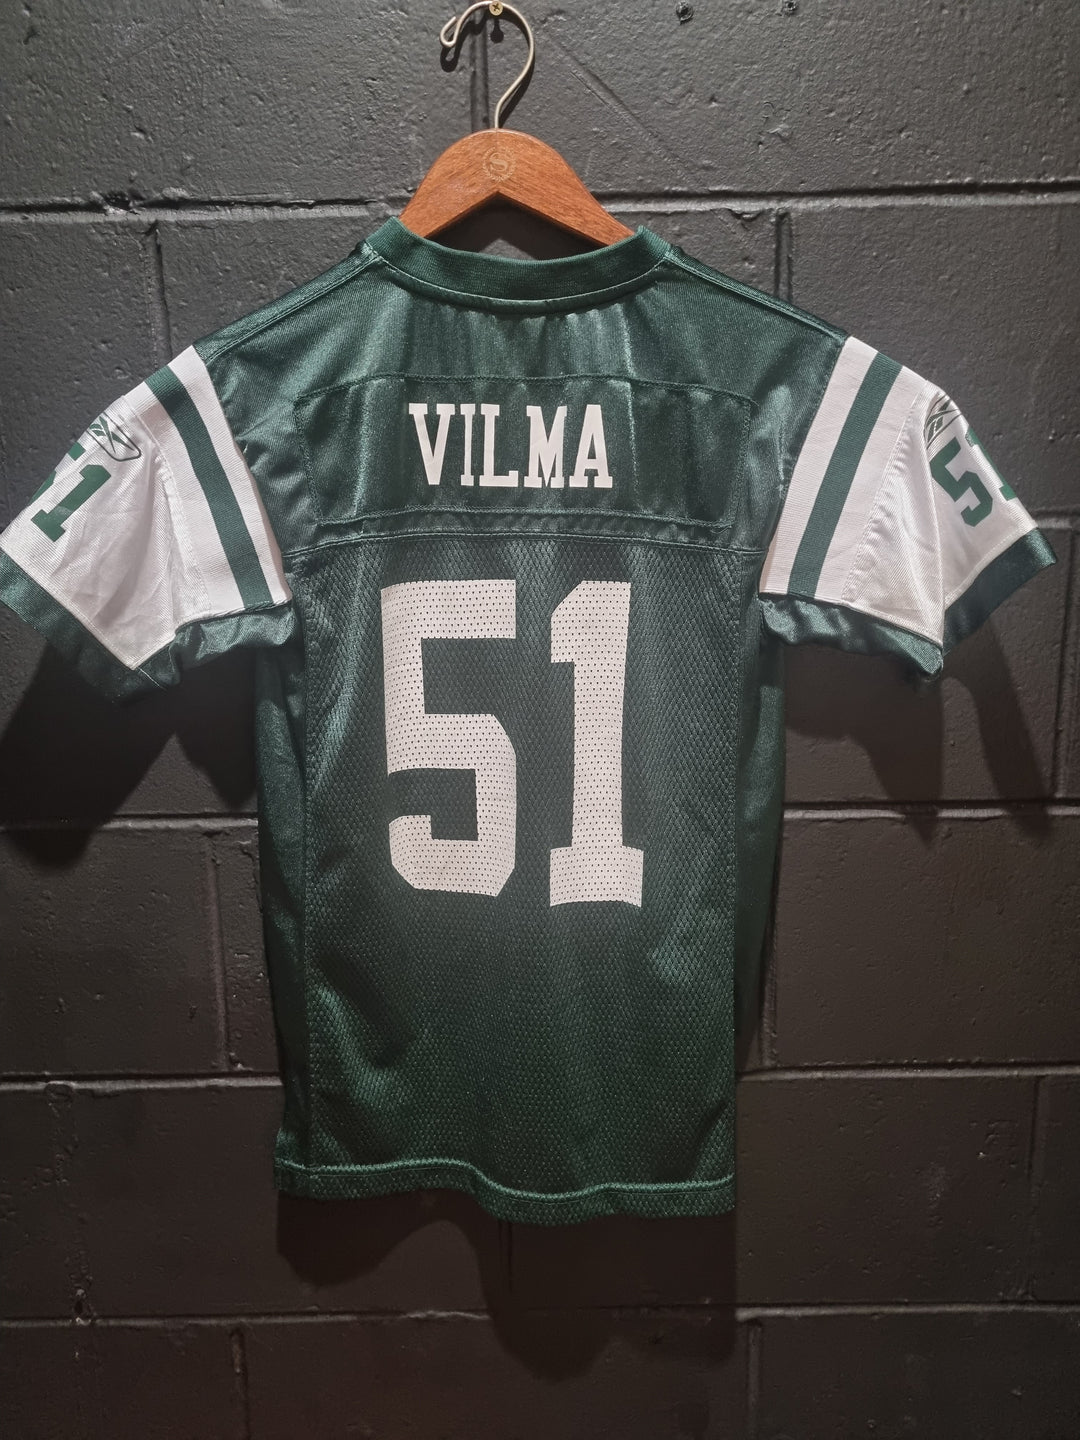 New York Jets Vilma Reebok Kids Medium (10/12)